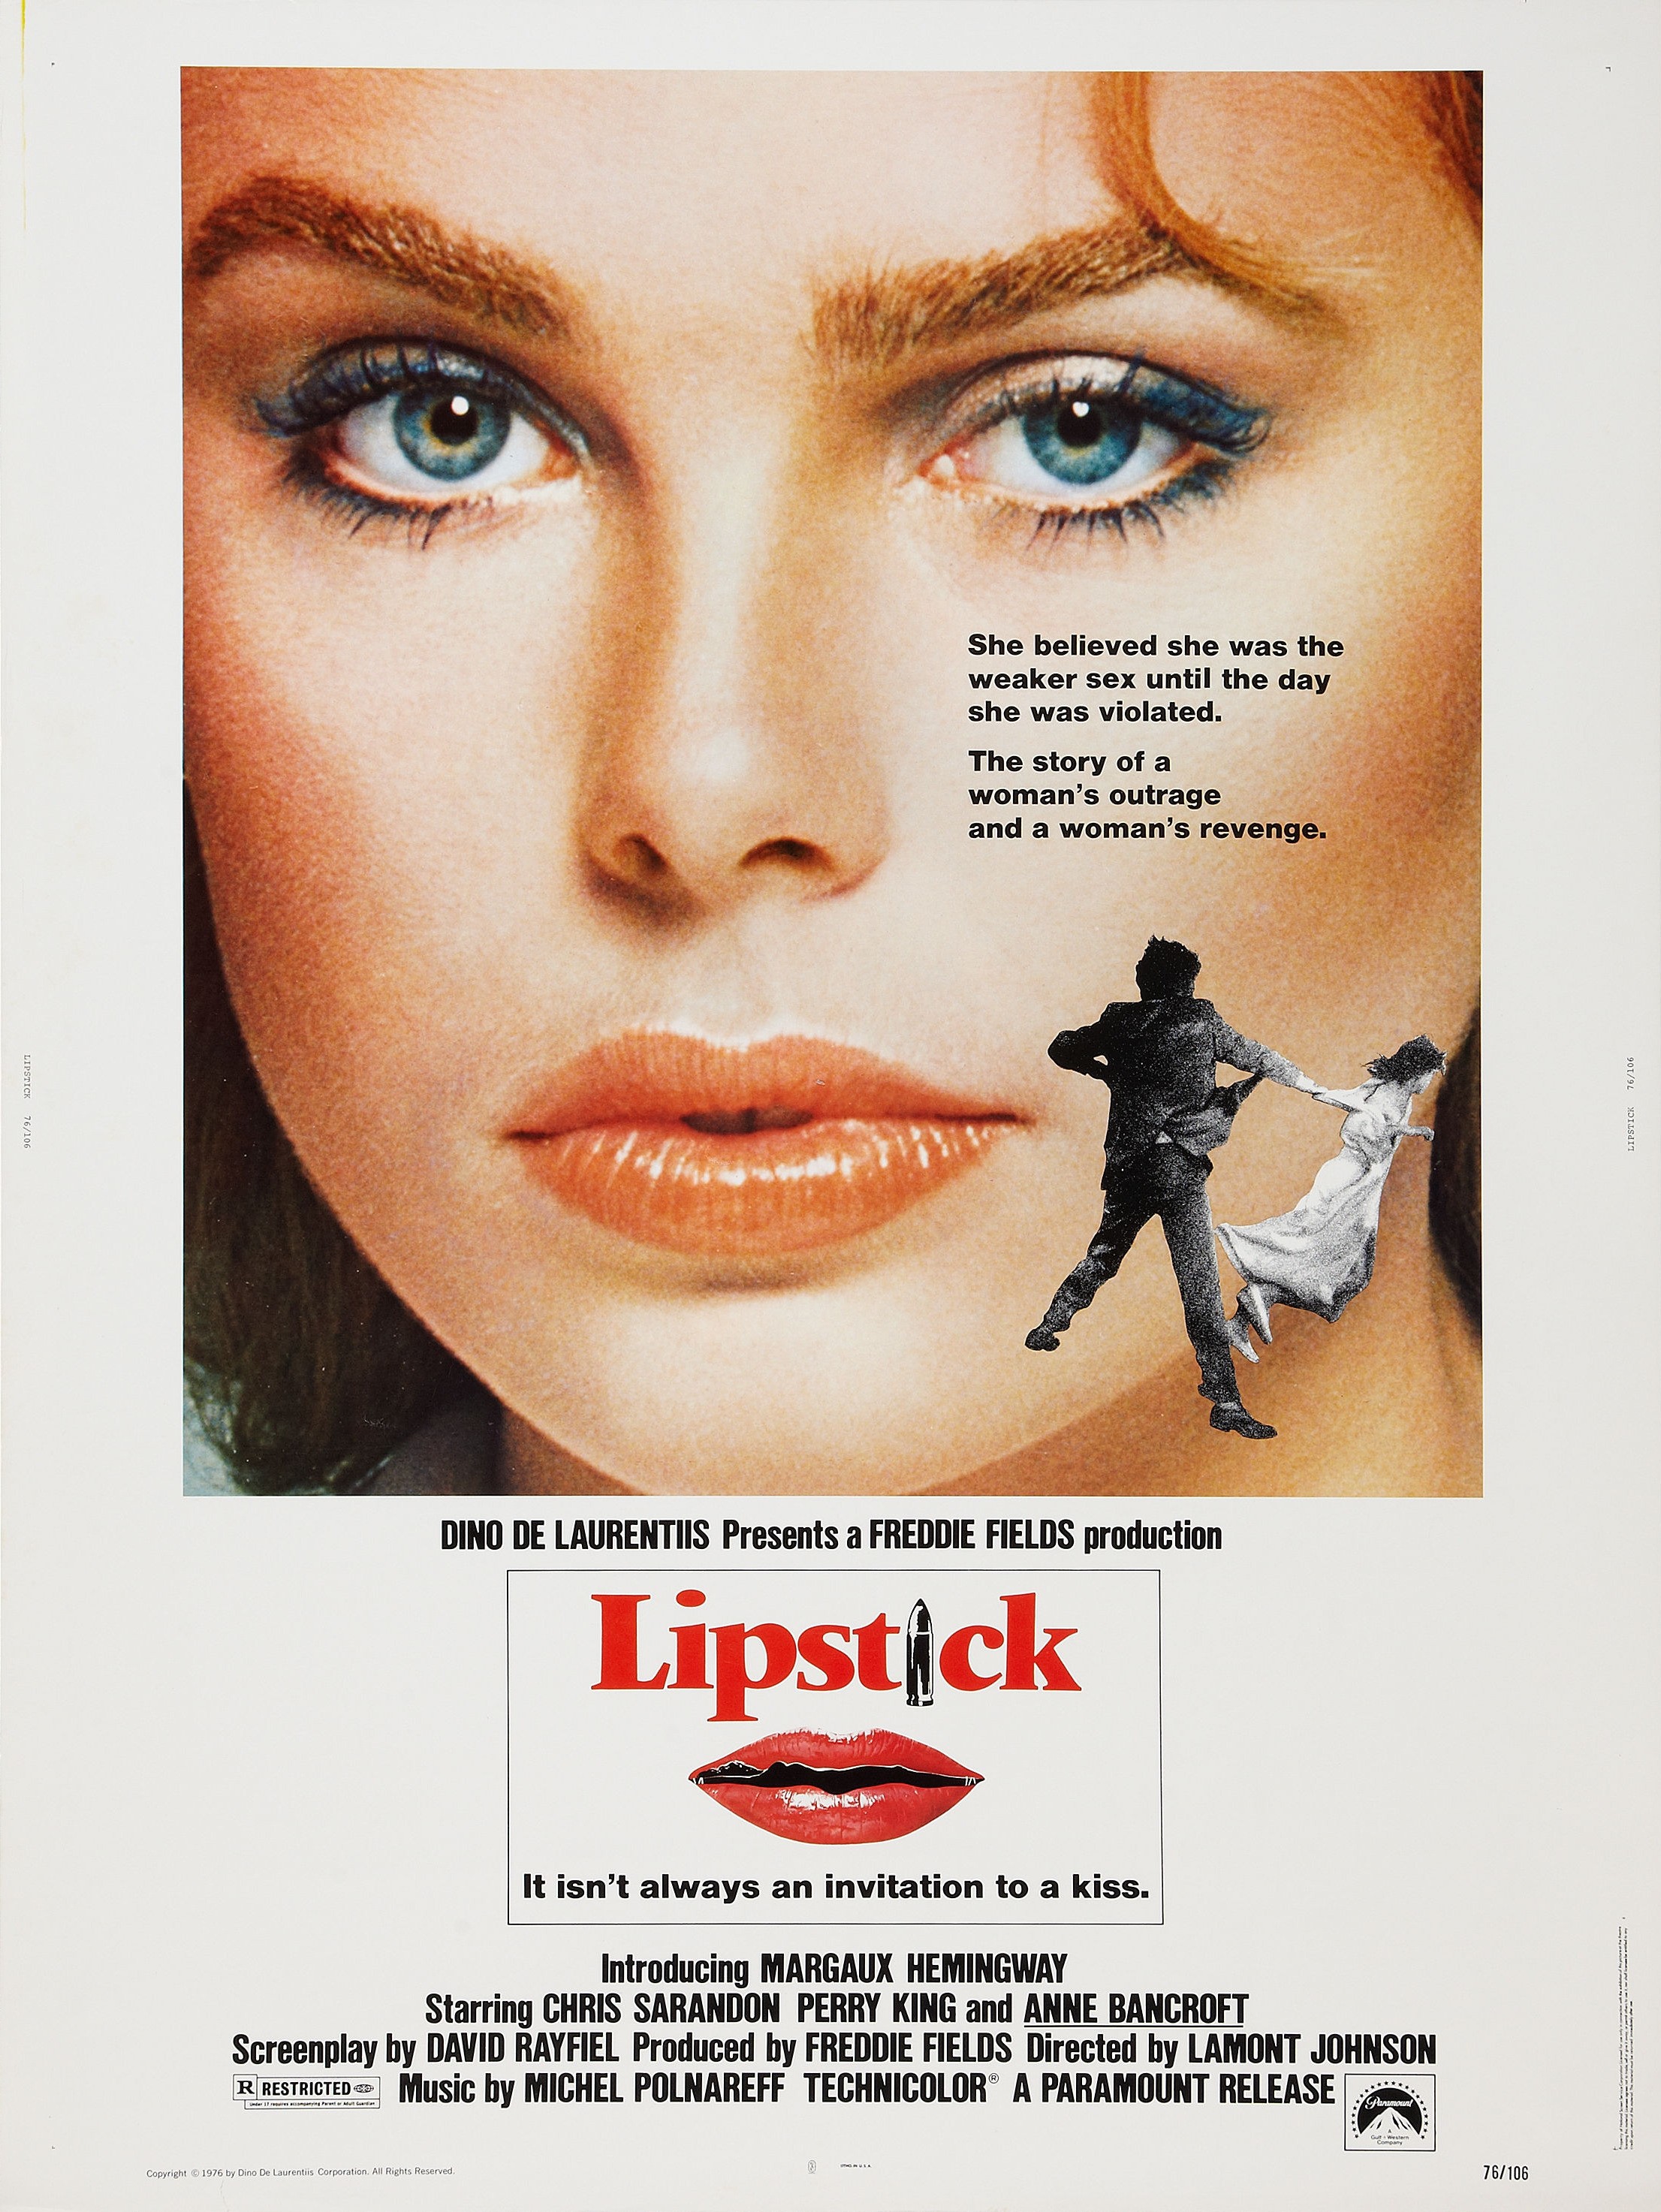 Mega Sized Movie Poster Image for Lipstick 